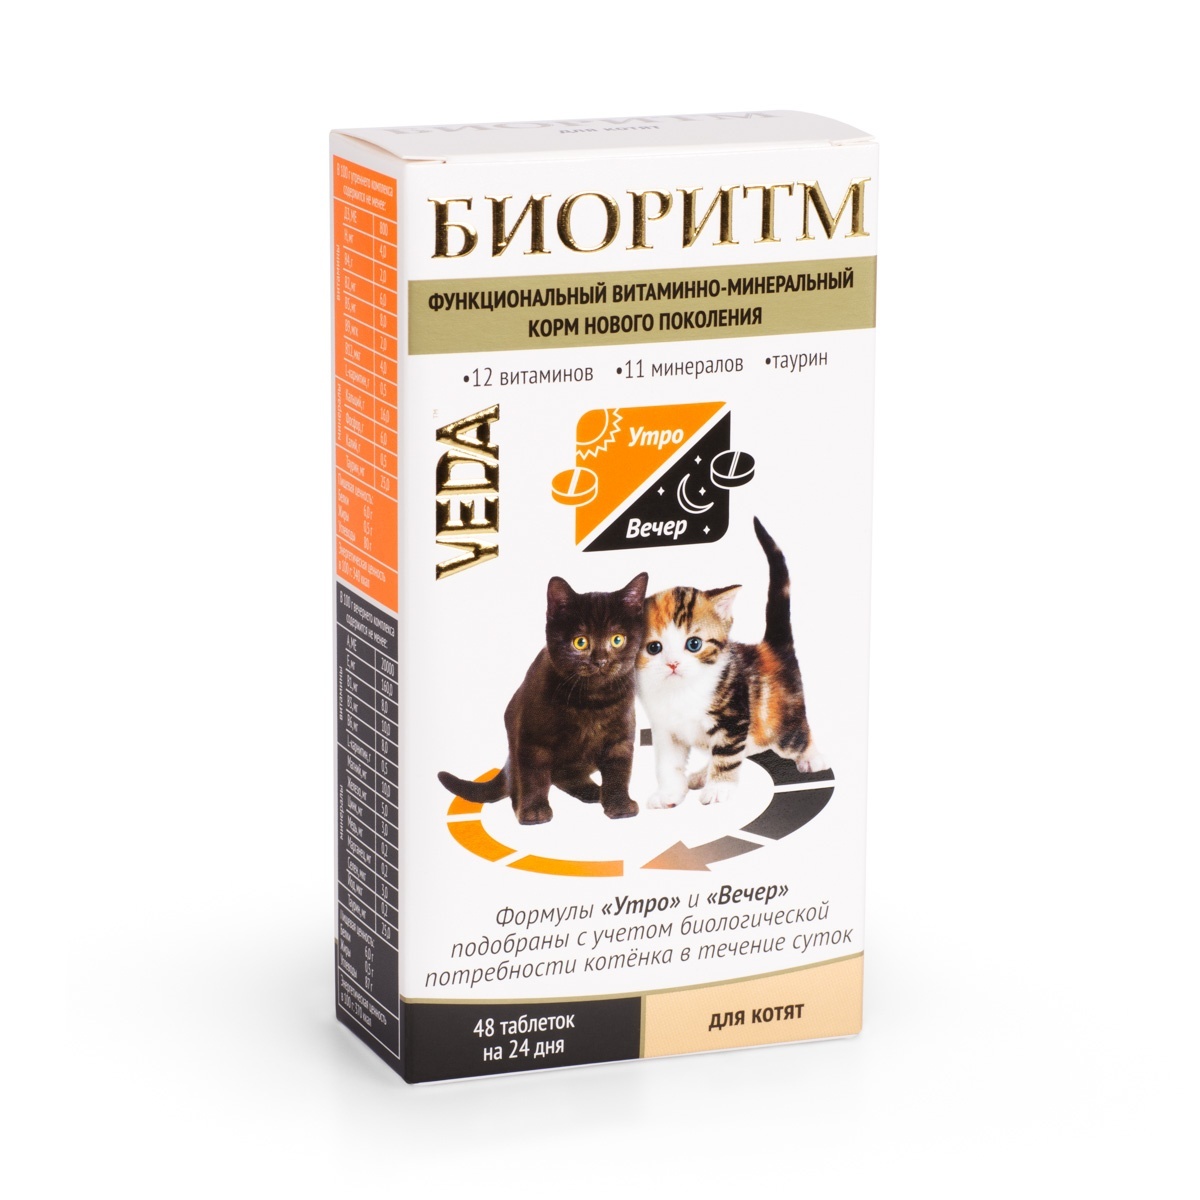 Веда Веда биоритм витамины для котят (20 г)